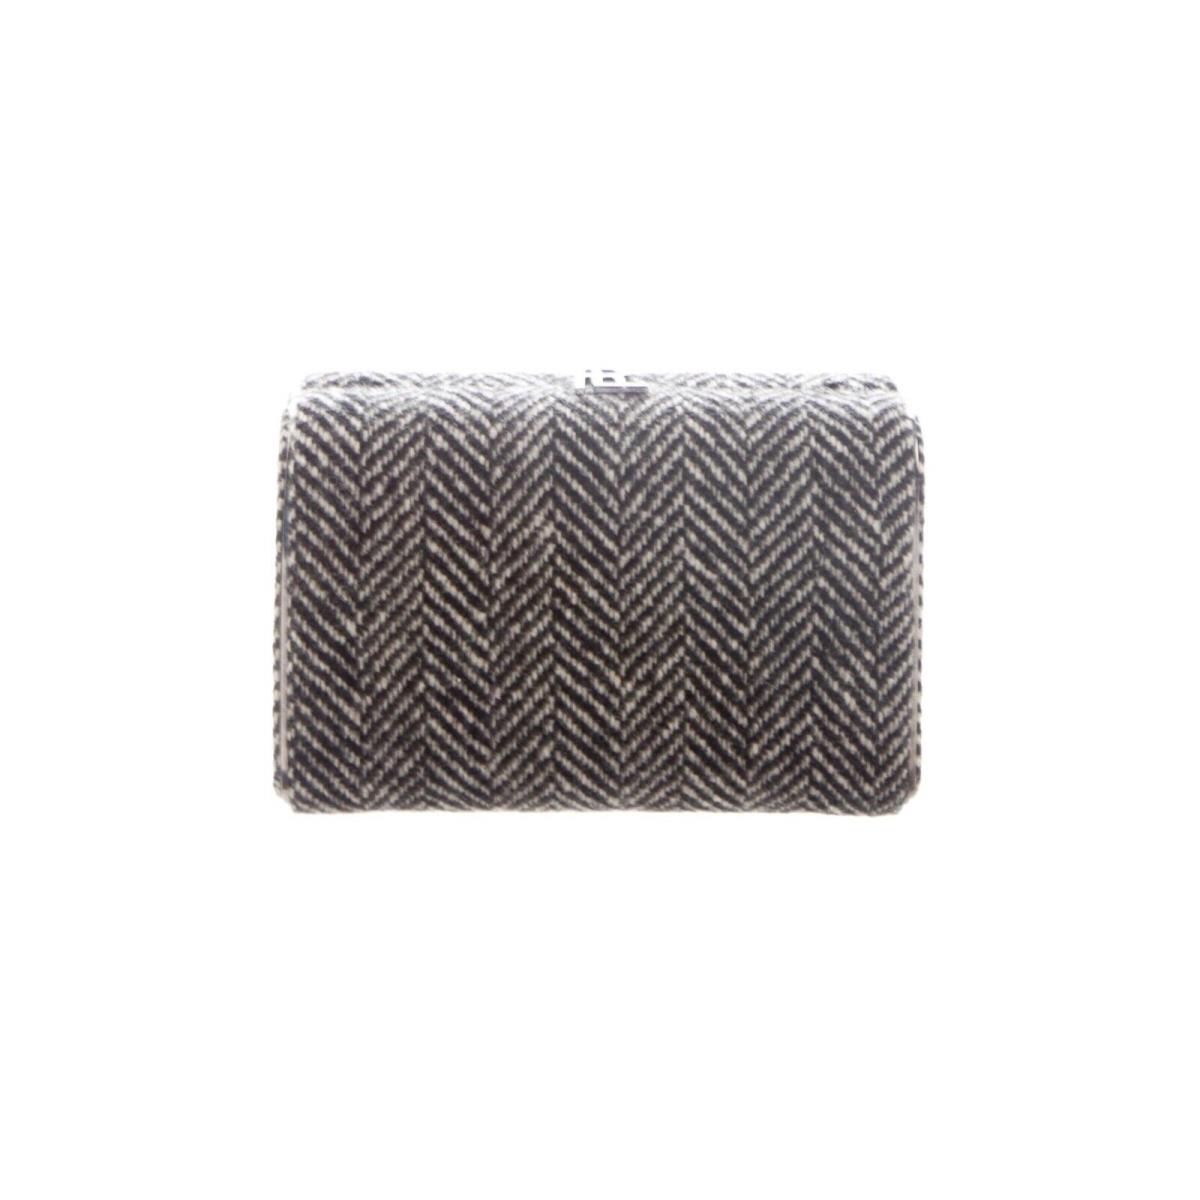 Ralph Lauren RL Cream and Gray Wool Herringbone Evening Clutch Handbag